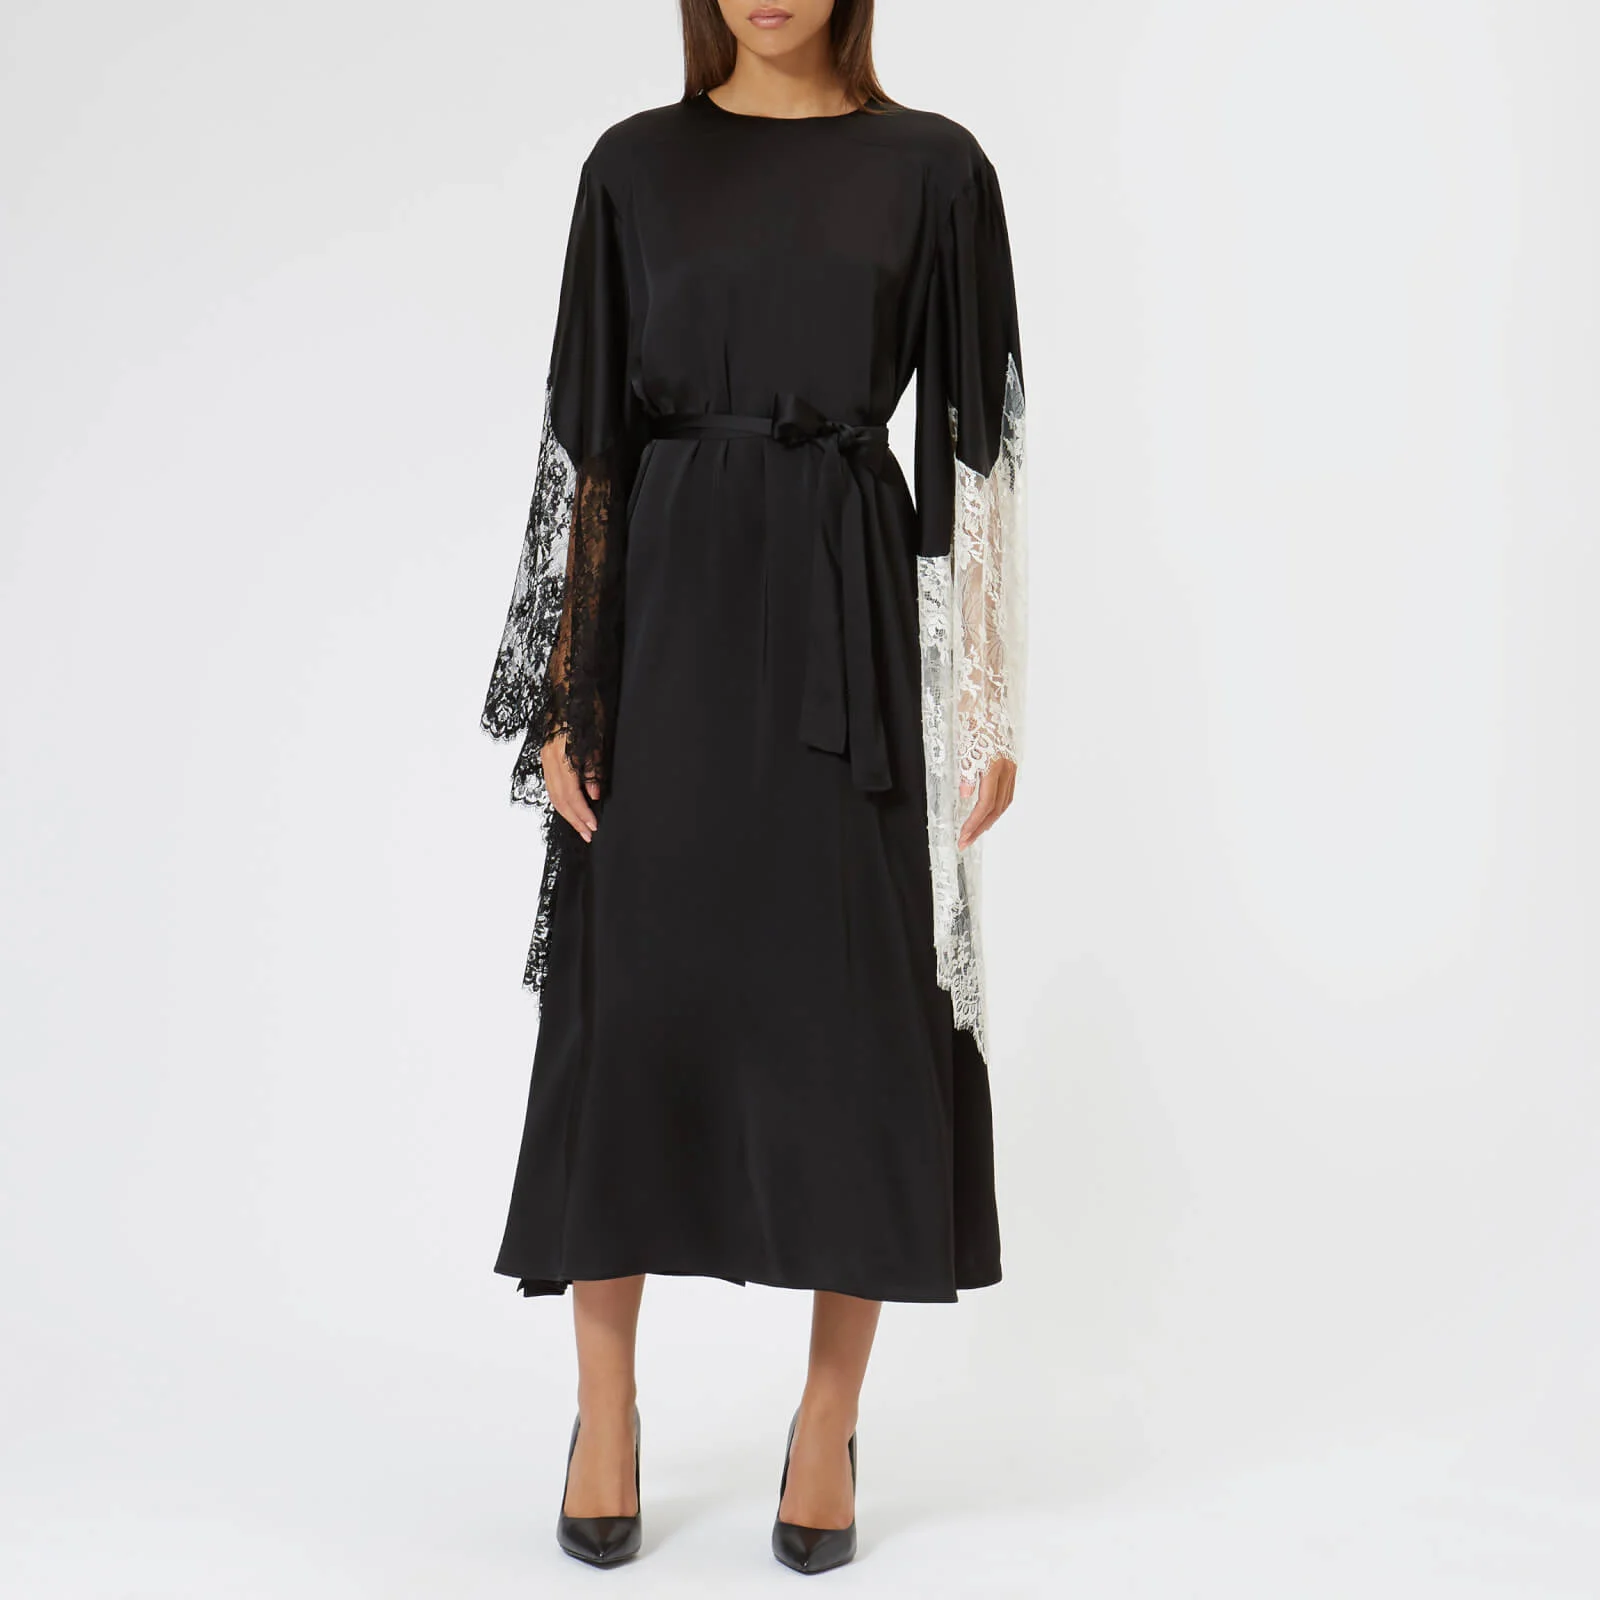 Christopher Kane Women's Lace Trim Satin Dress - Black Image 1